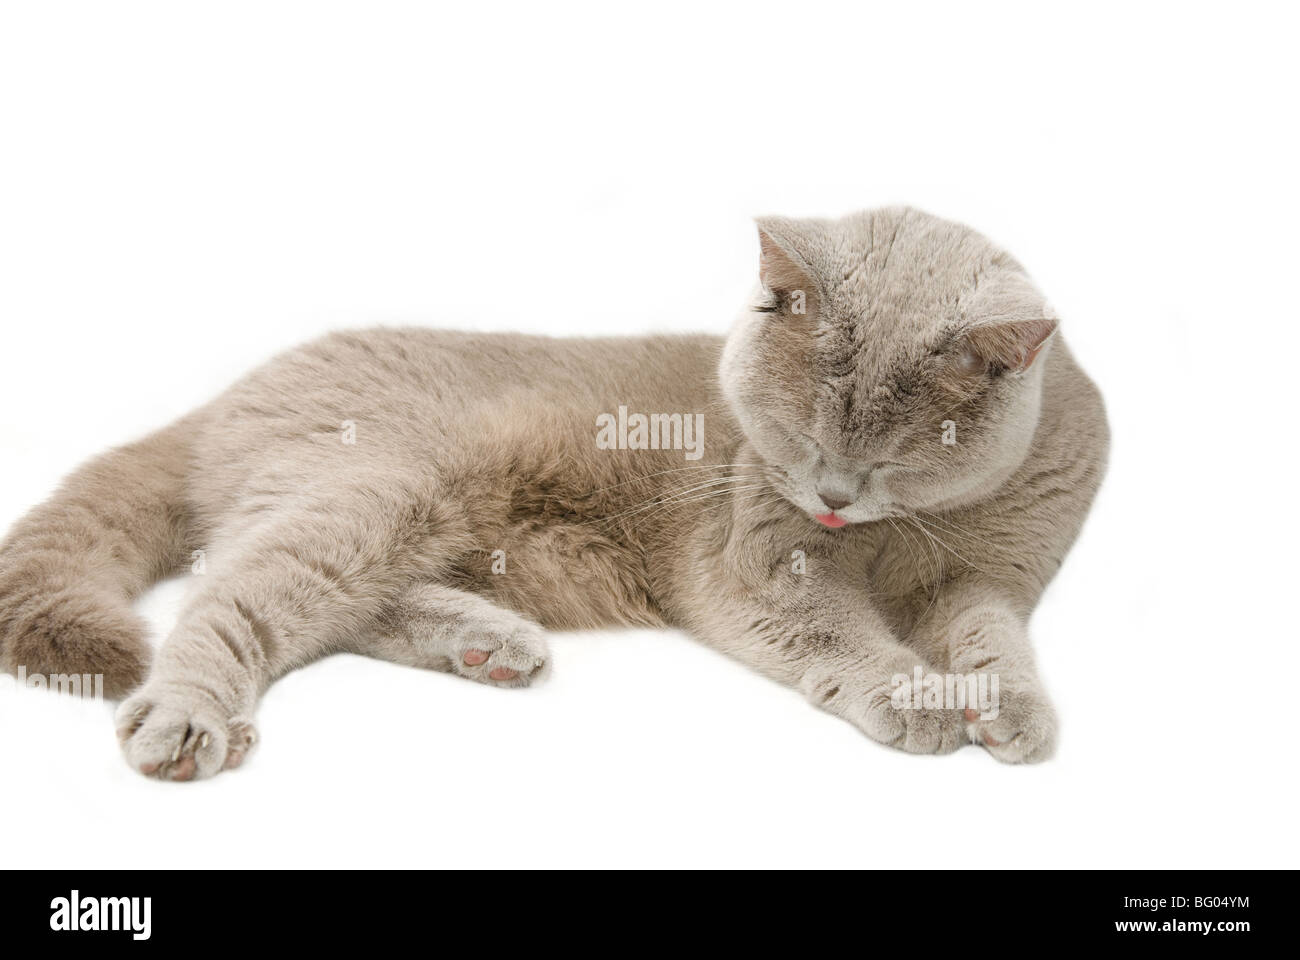 British cat on a white background Stock Photo